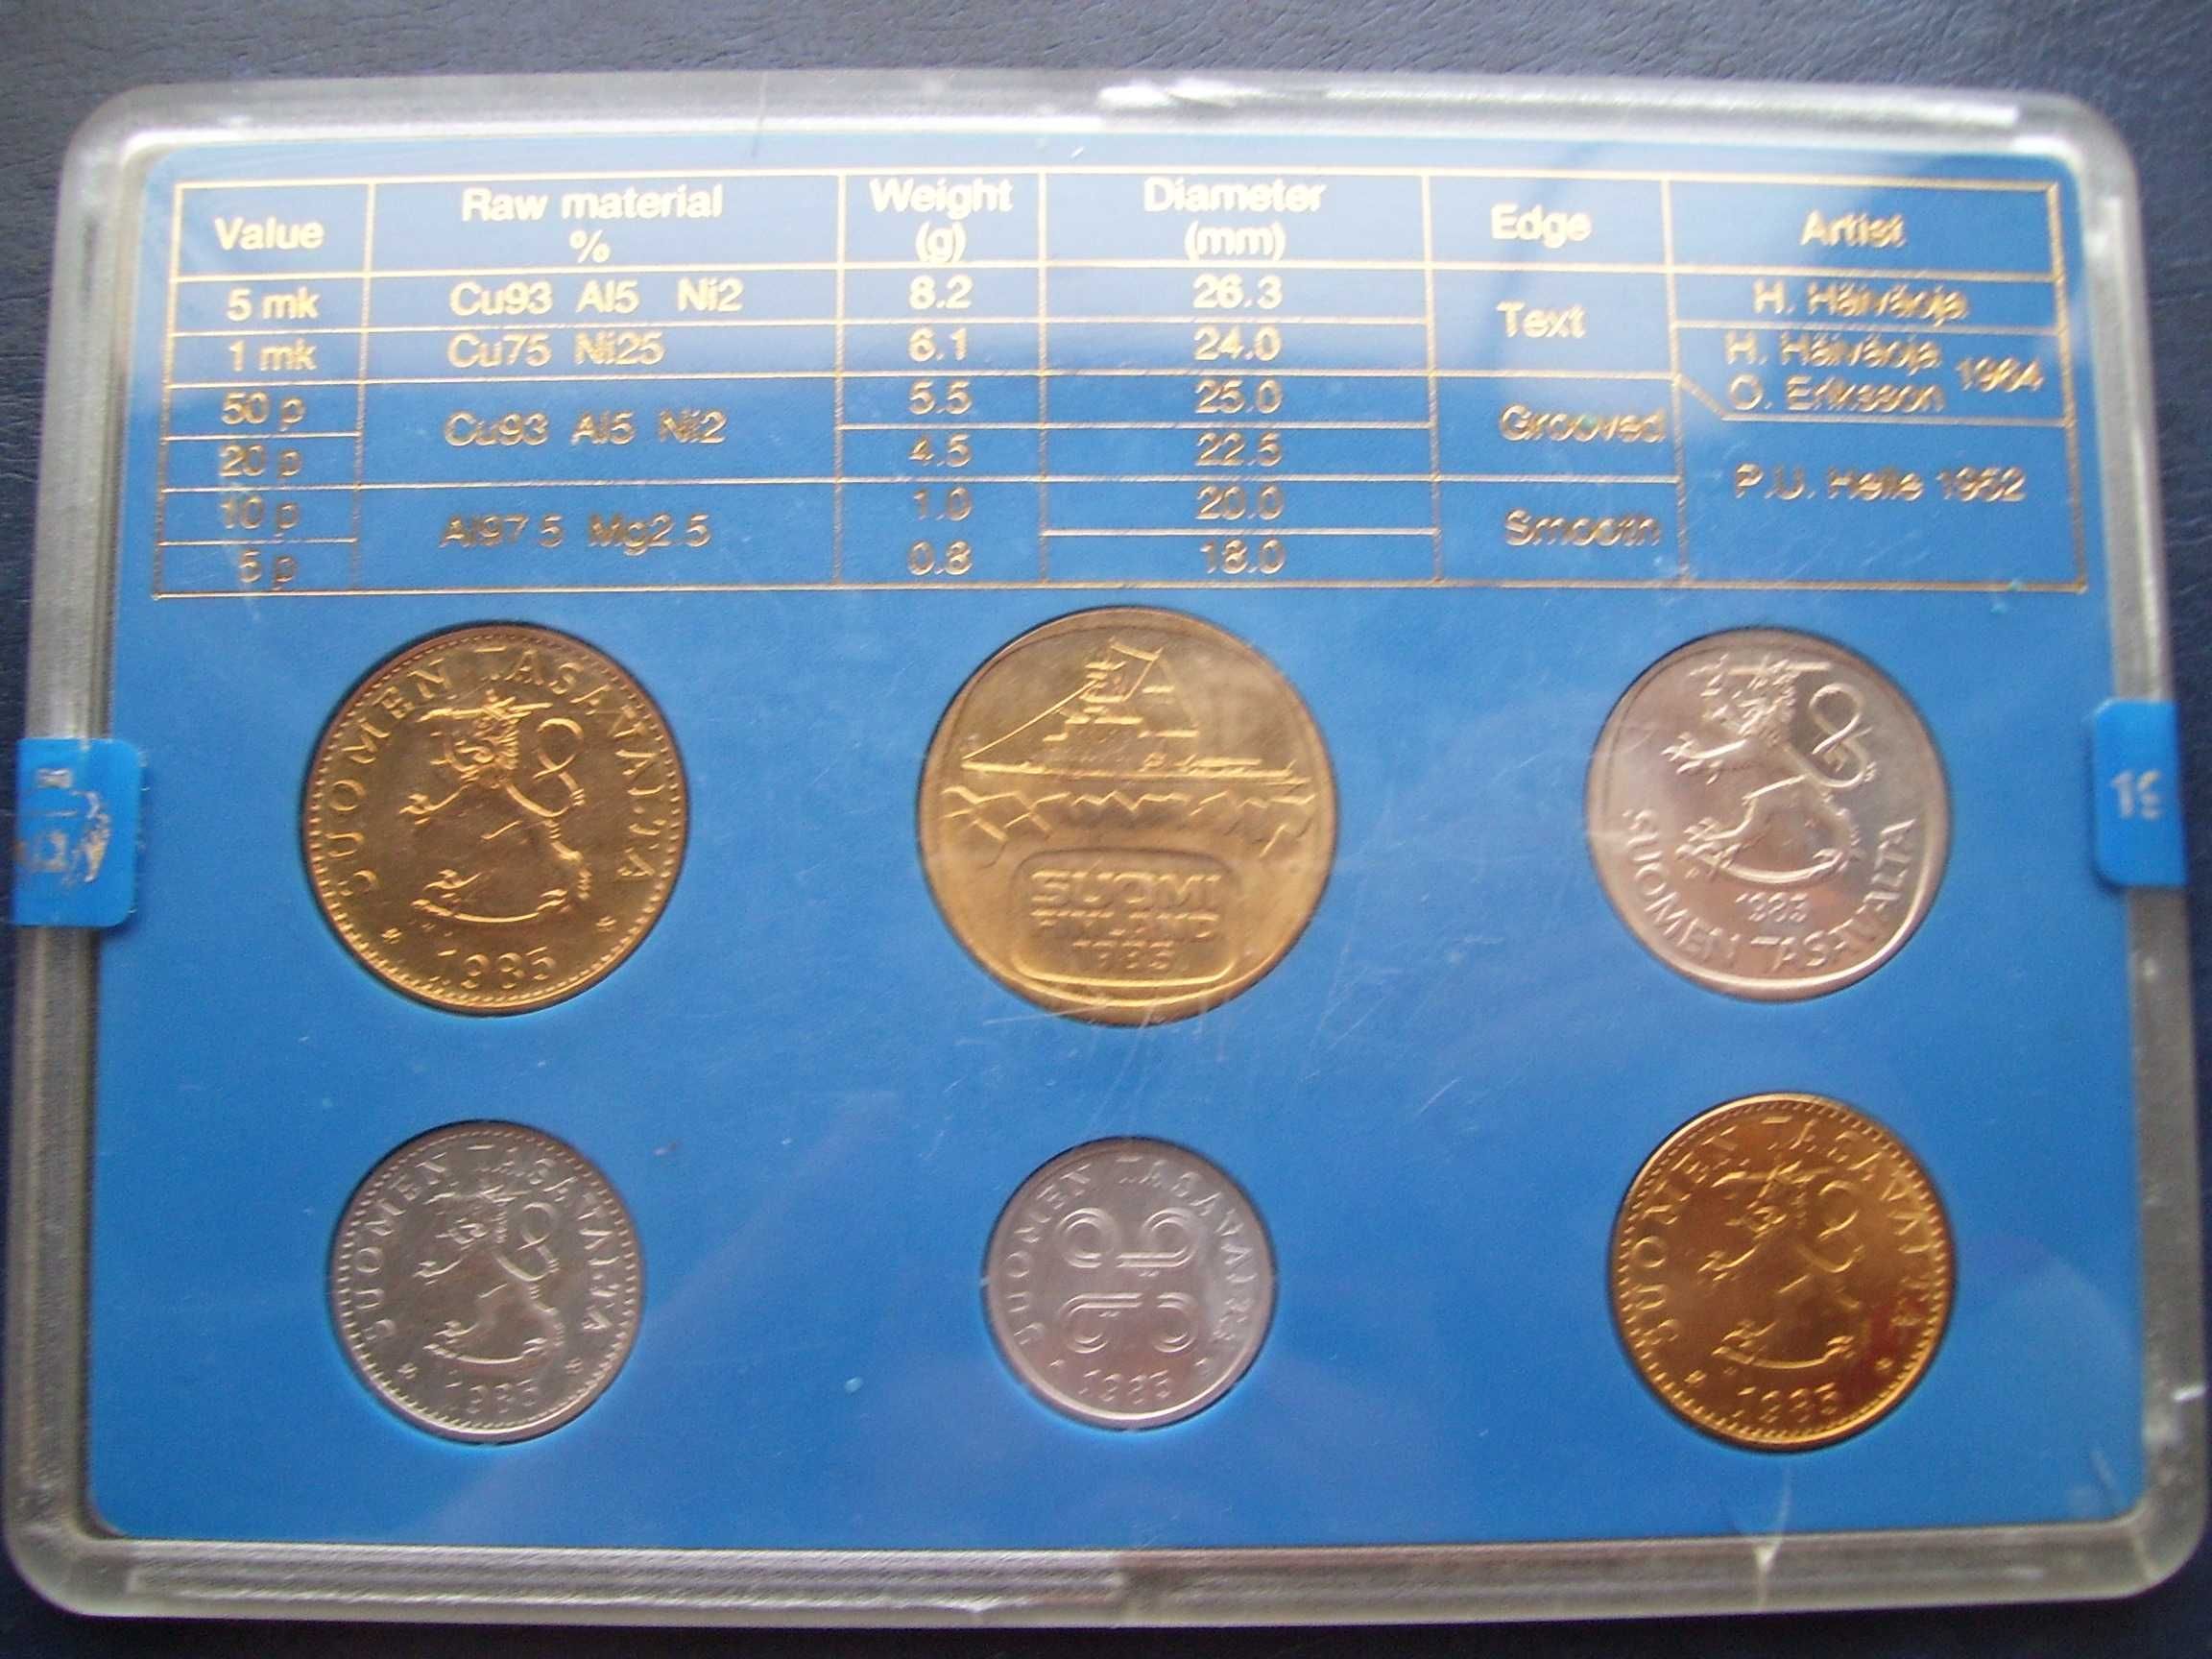 Stare monety Finlandia rocznik 1985 stan menniczy